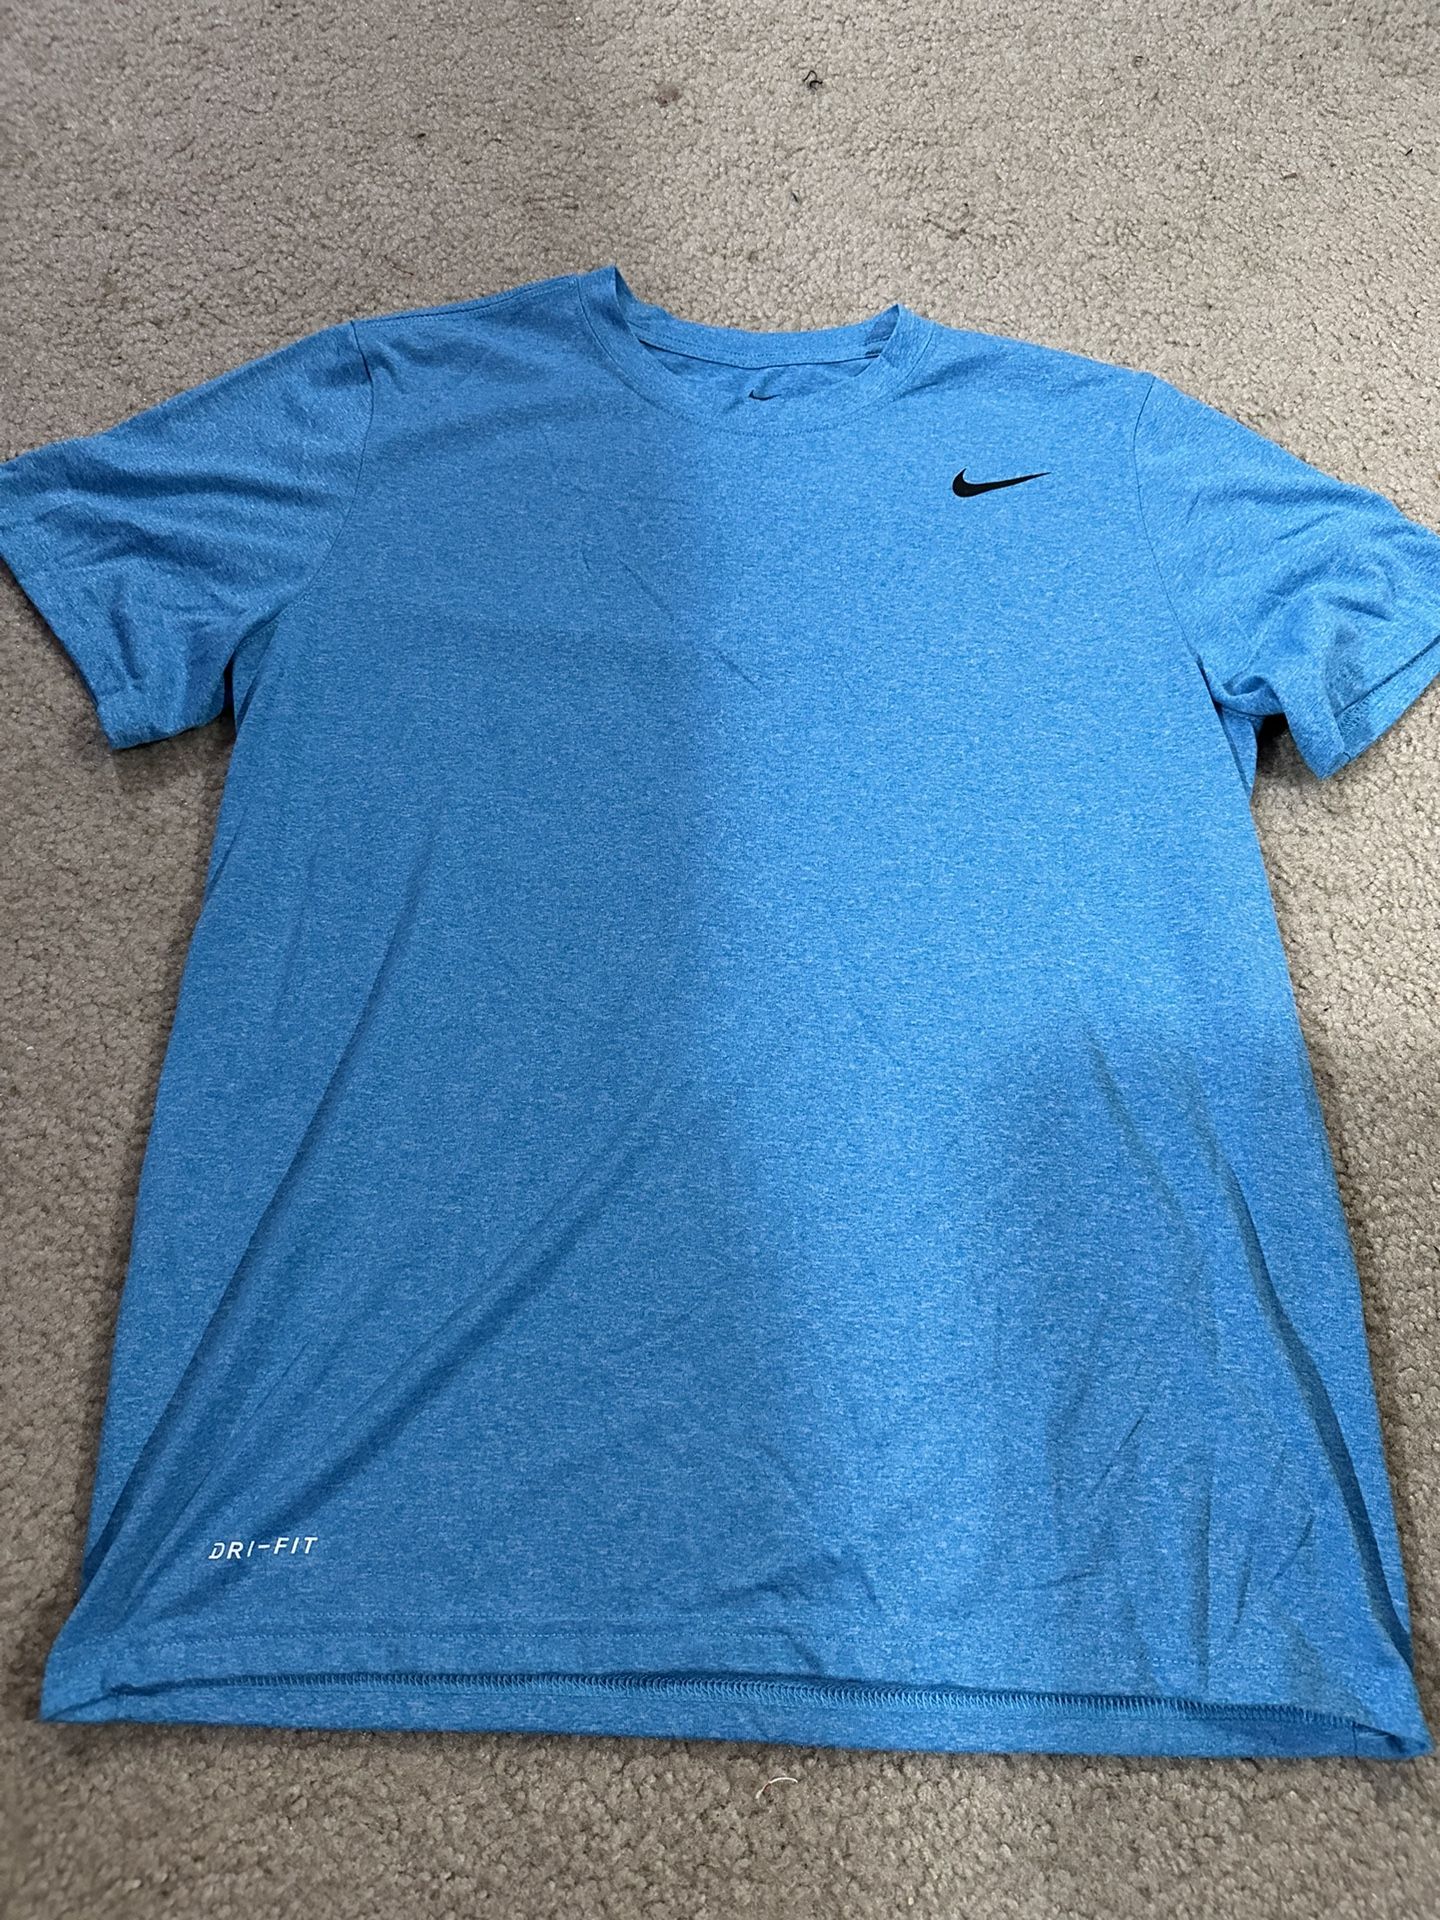 Men’s Nike T-Shirt Dry Fit